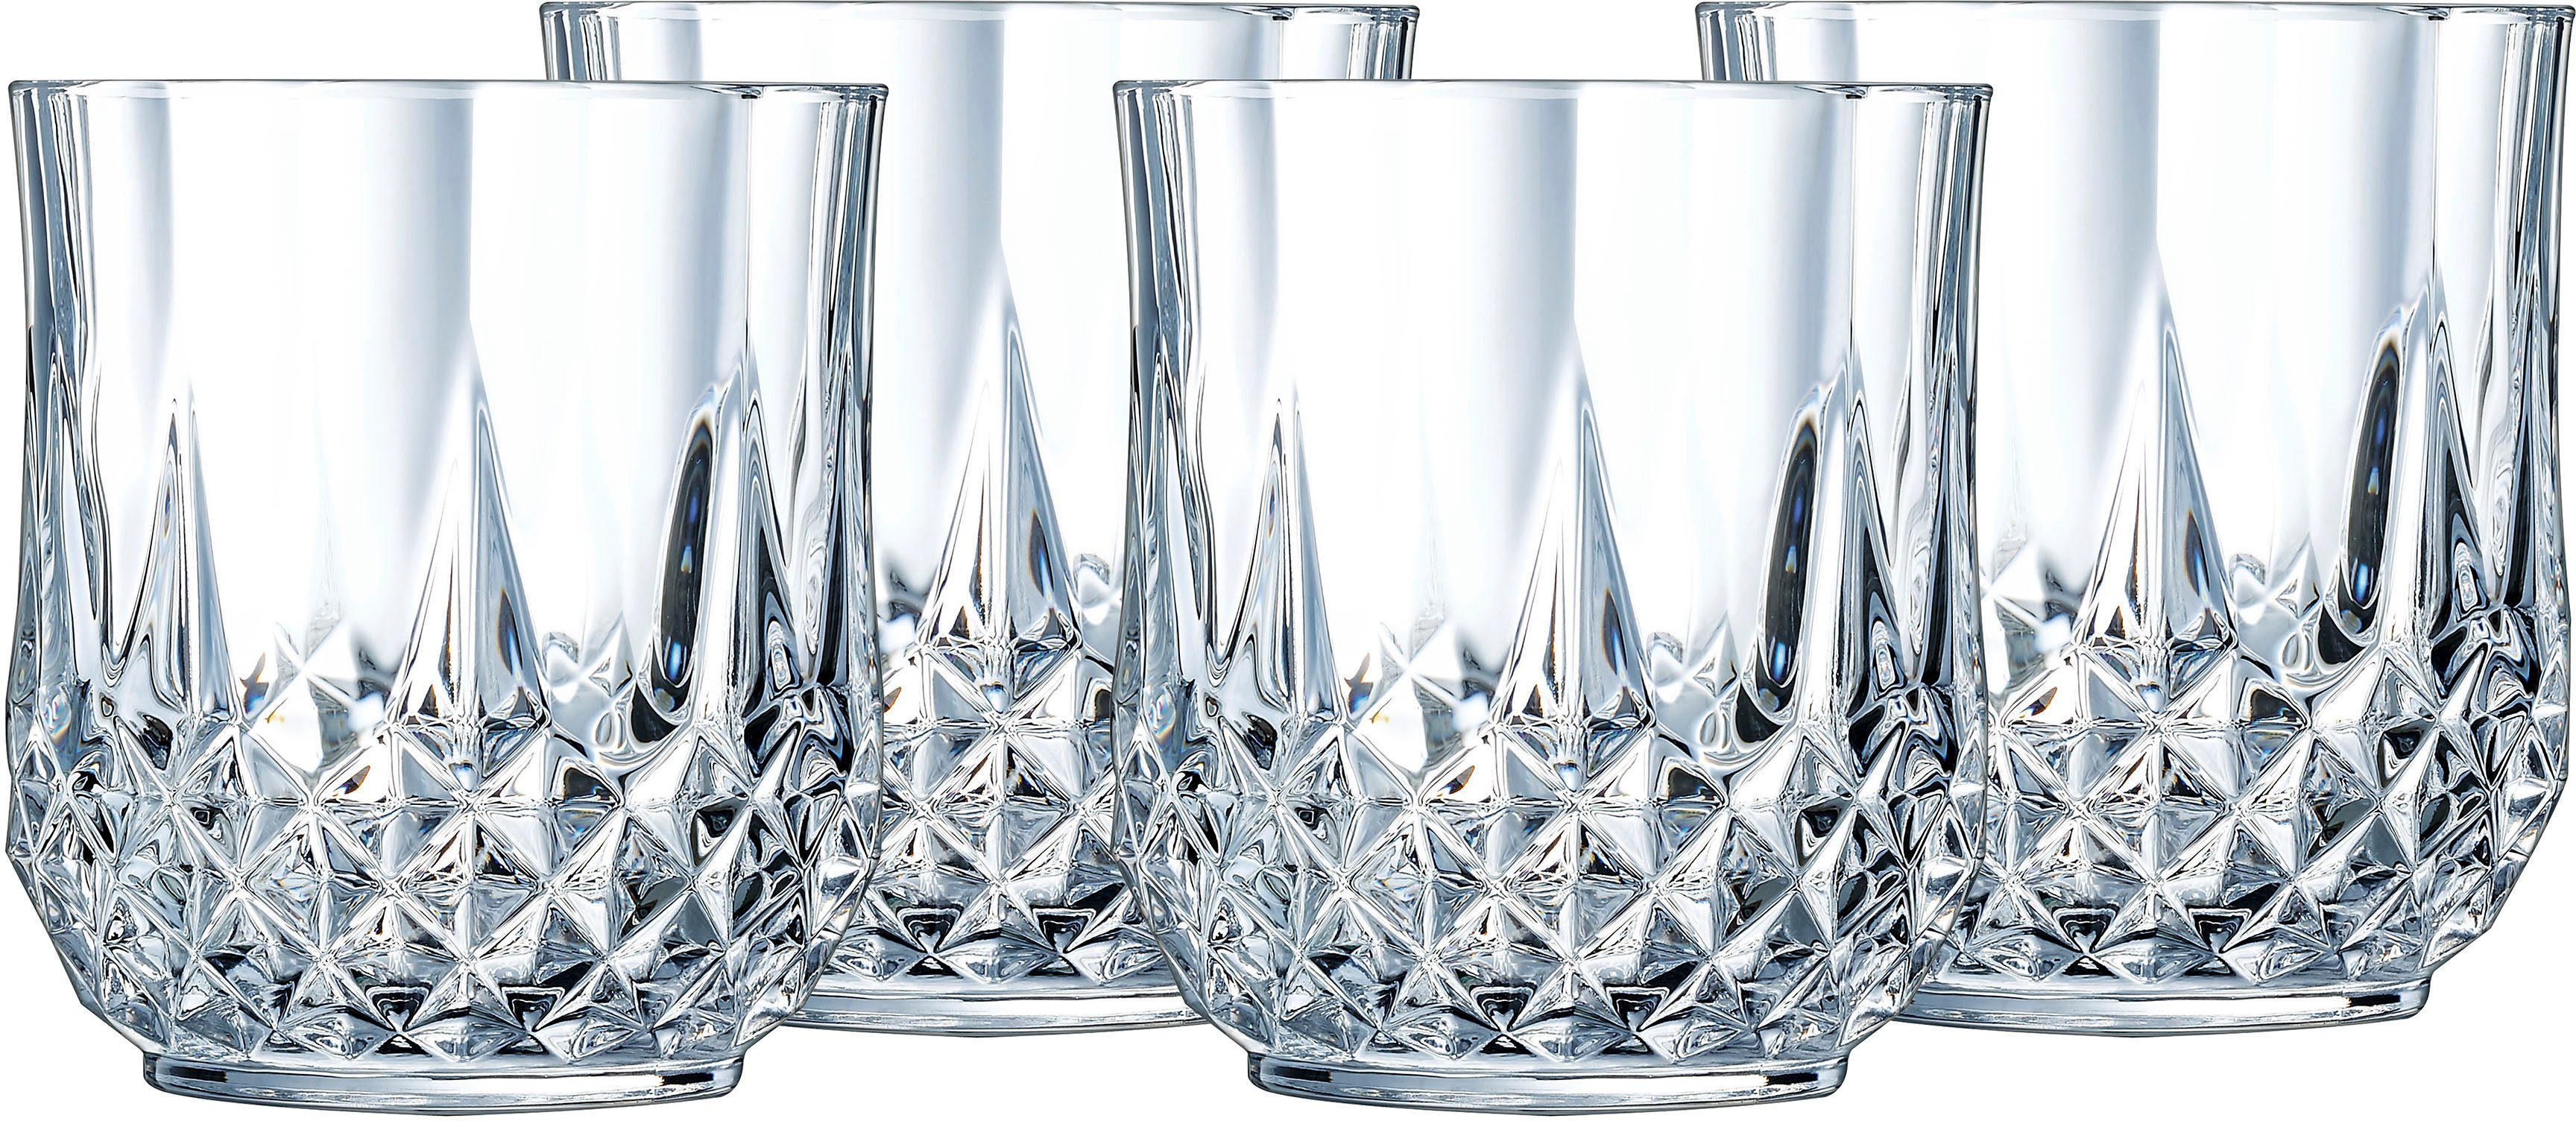 CreaTable Luminarc Whiskyglas Trinkglas Longchamp Eclat, Glas, Gläser Set, sehr hochwertiges Kristallinglas